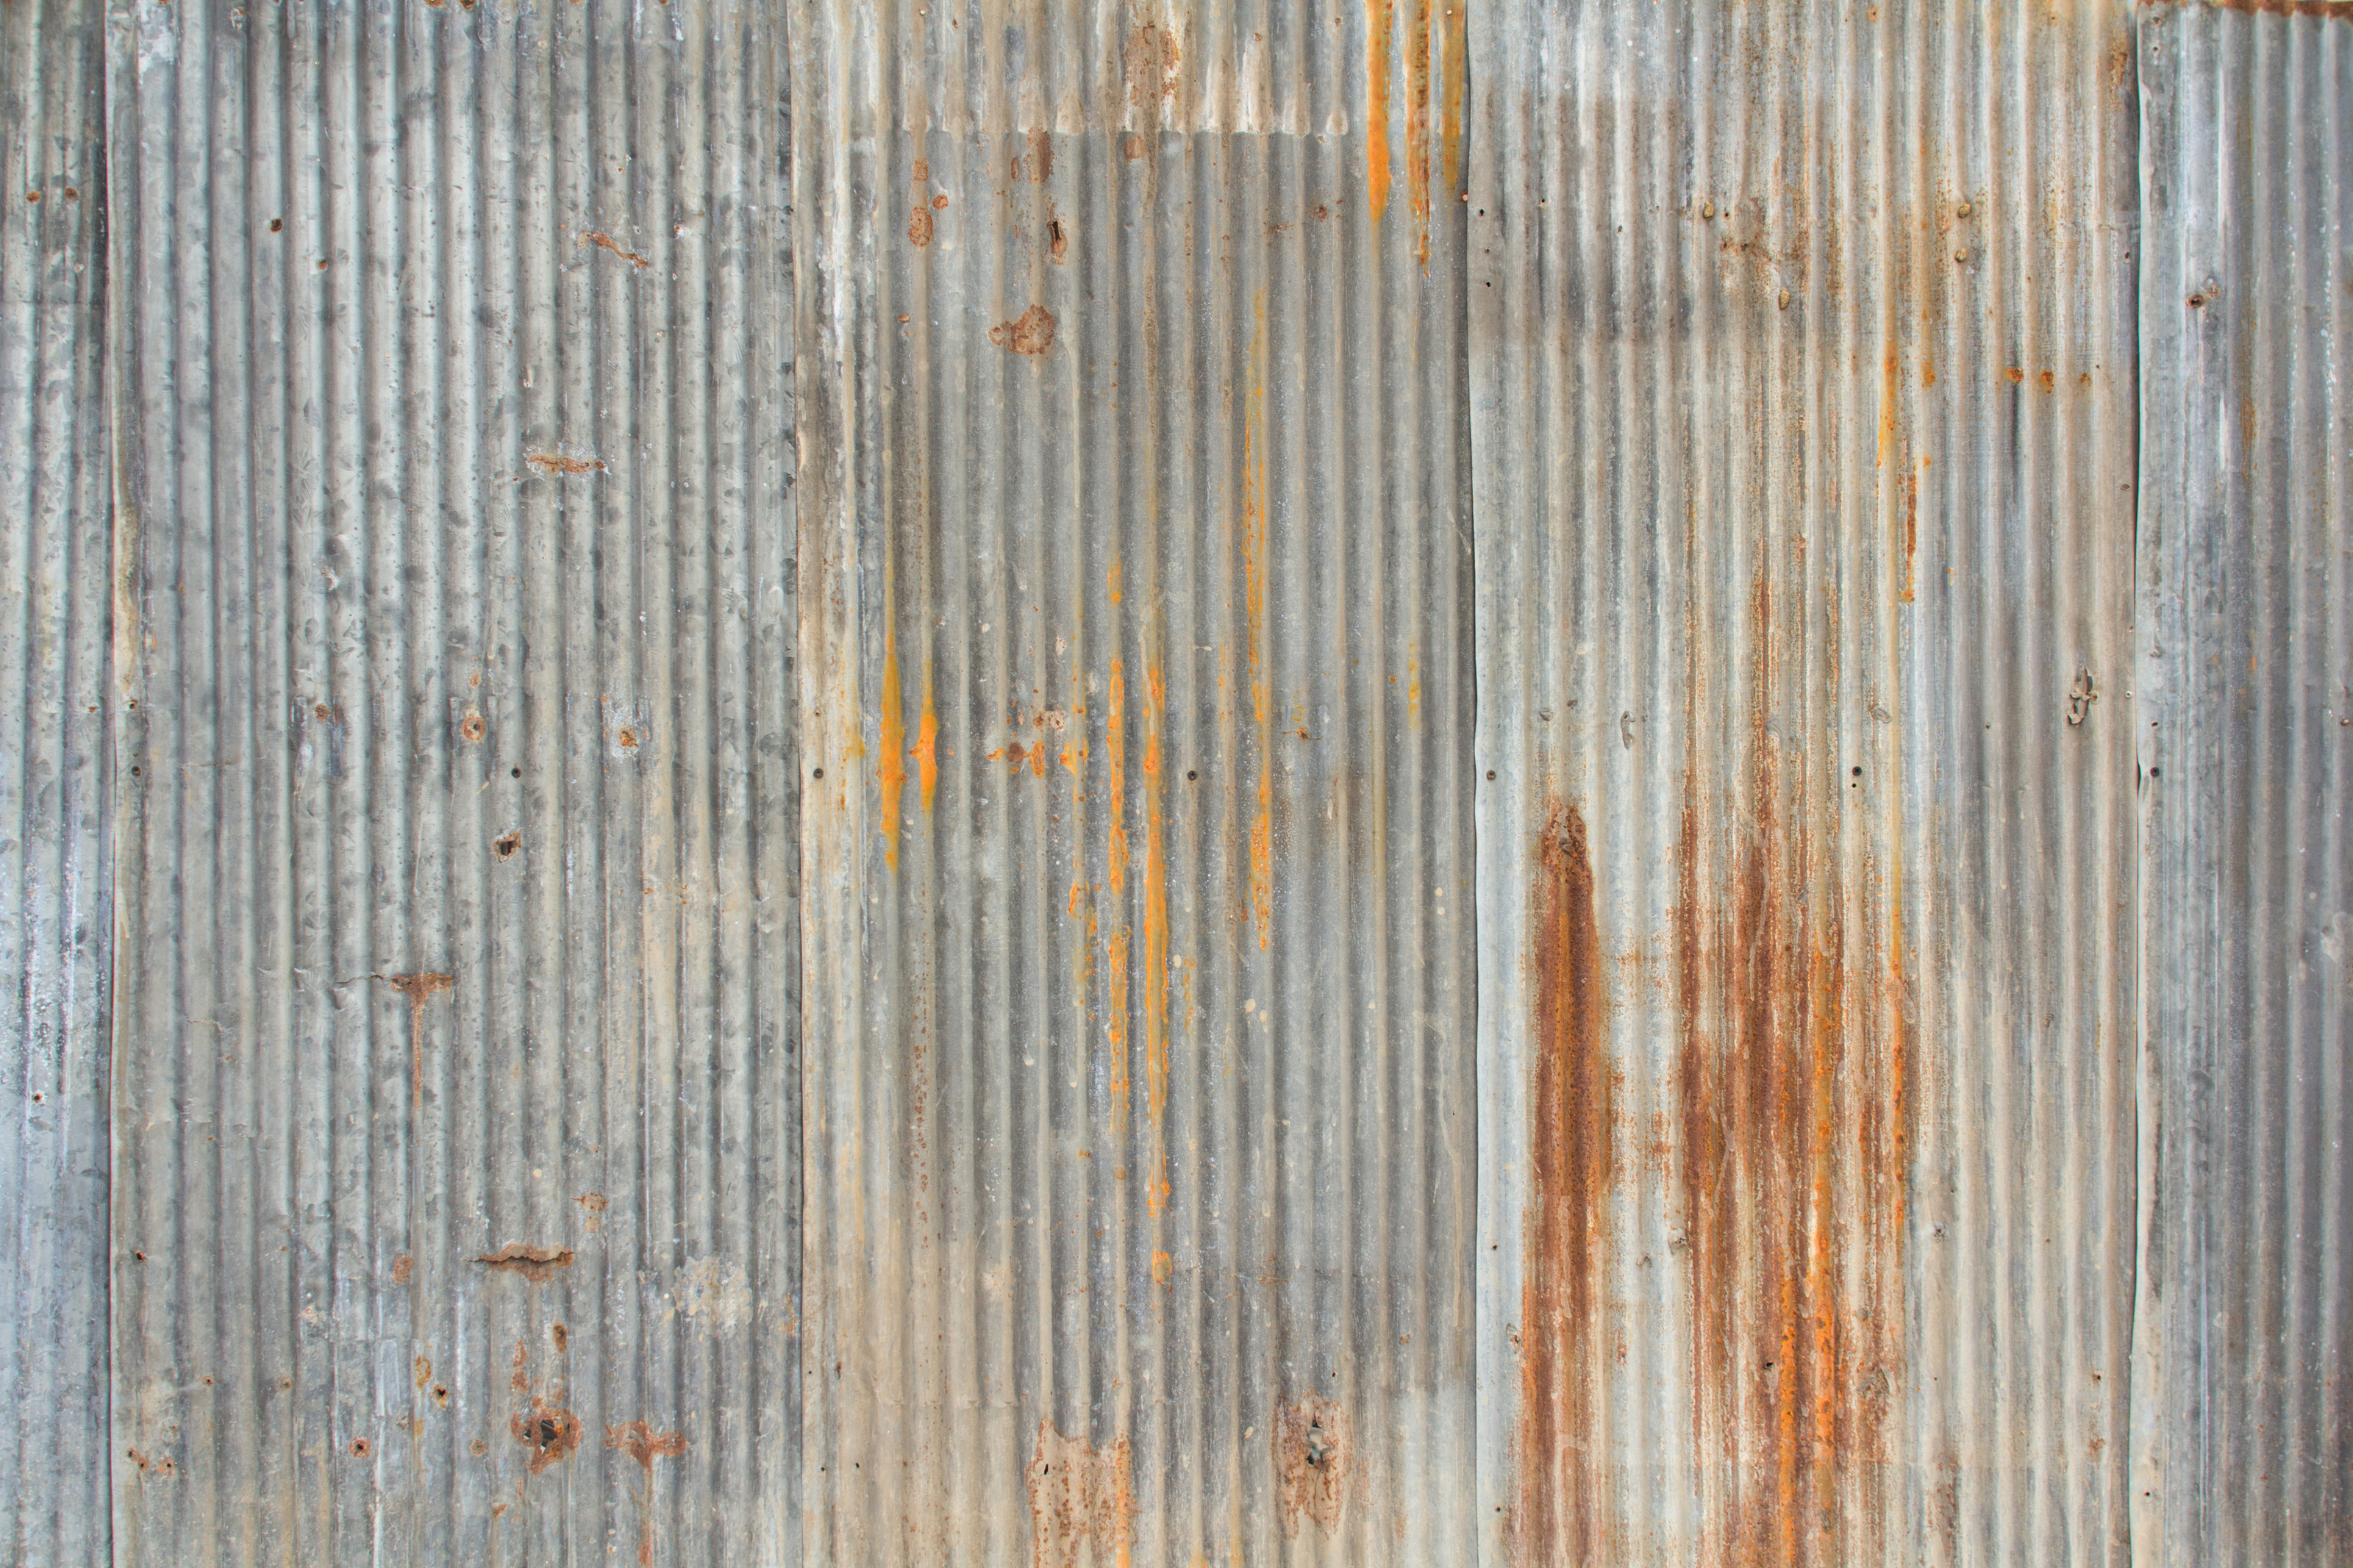 rusted metal wall panels